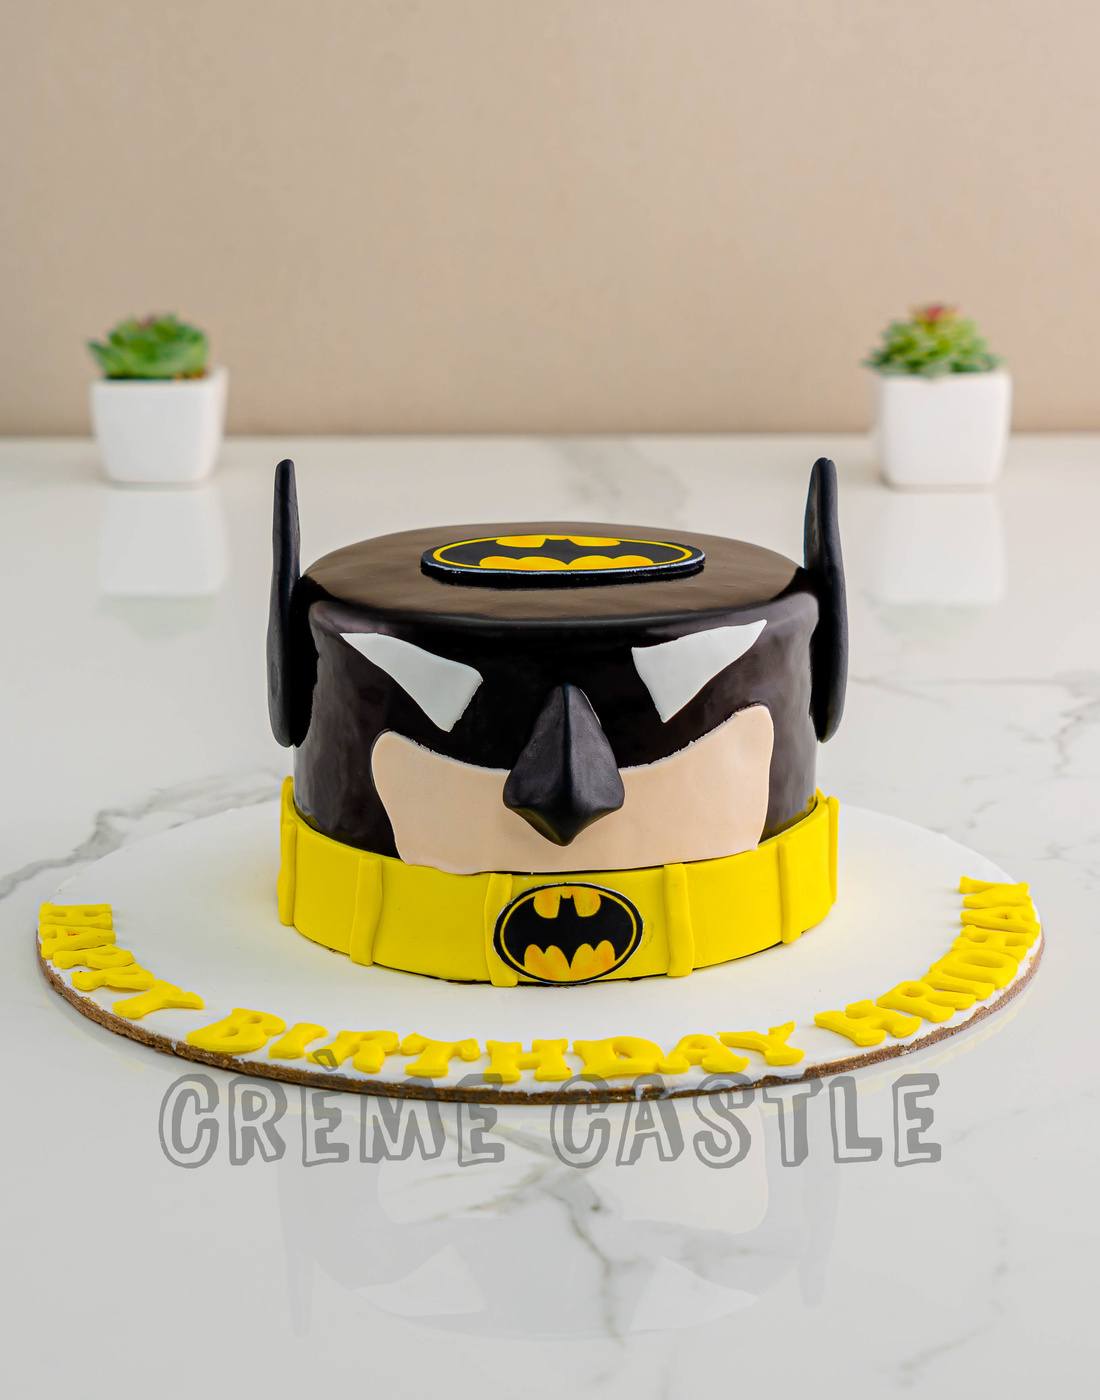 Epic Batman Cake - The Heroic Dessert